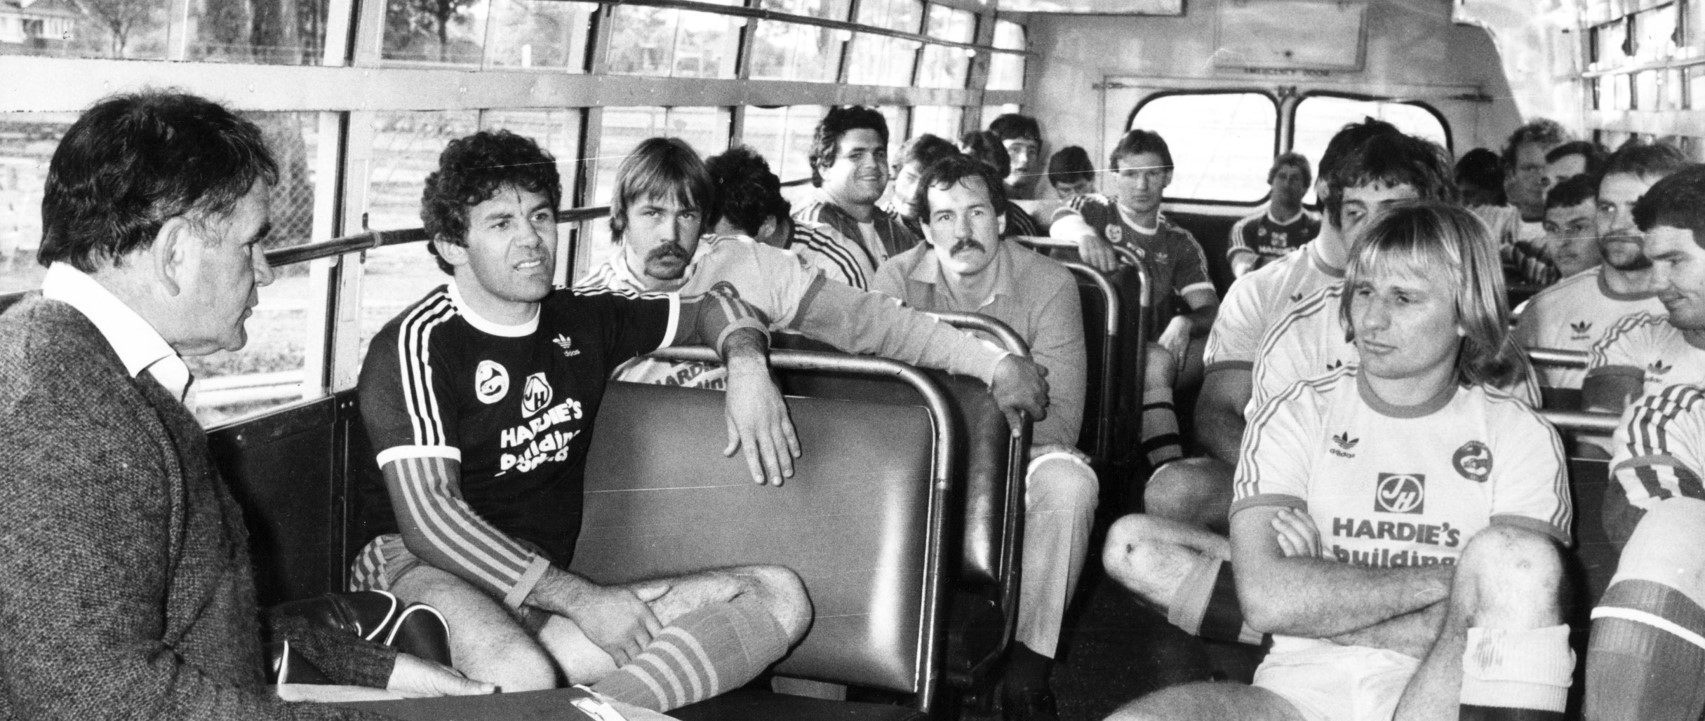 Photograph of the 1981 Parramatta Eels team sitting on a bus